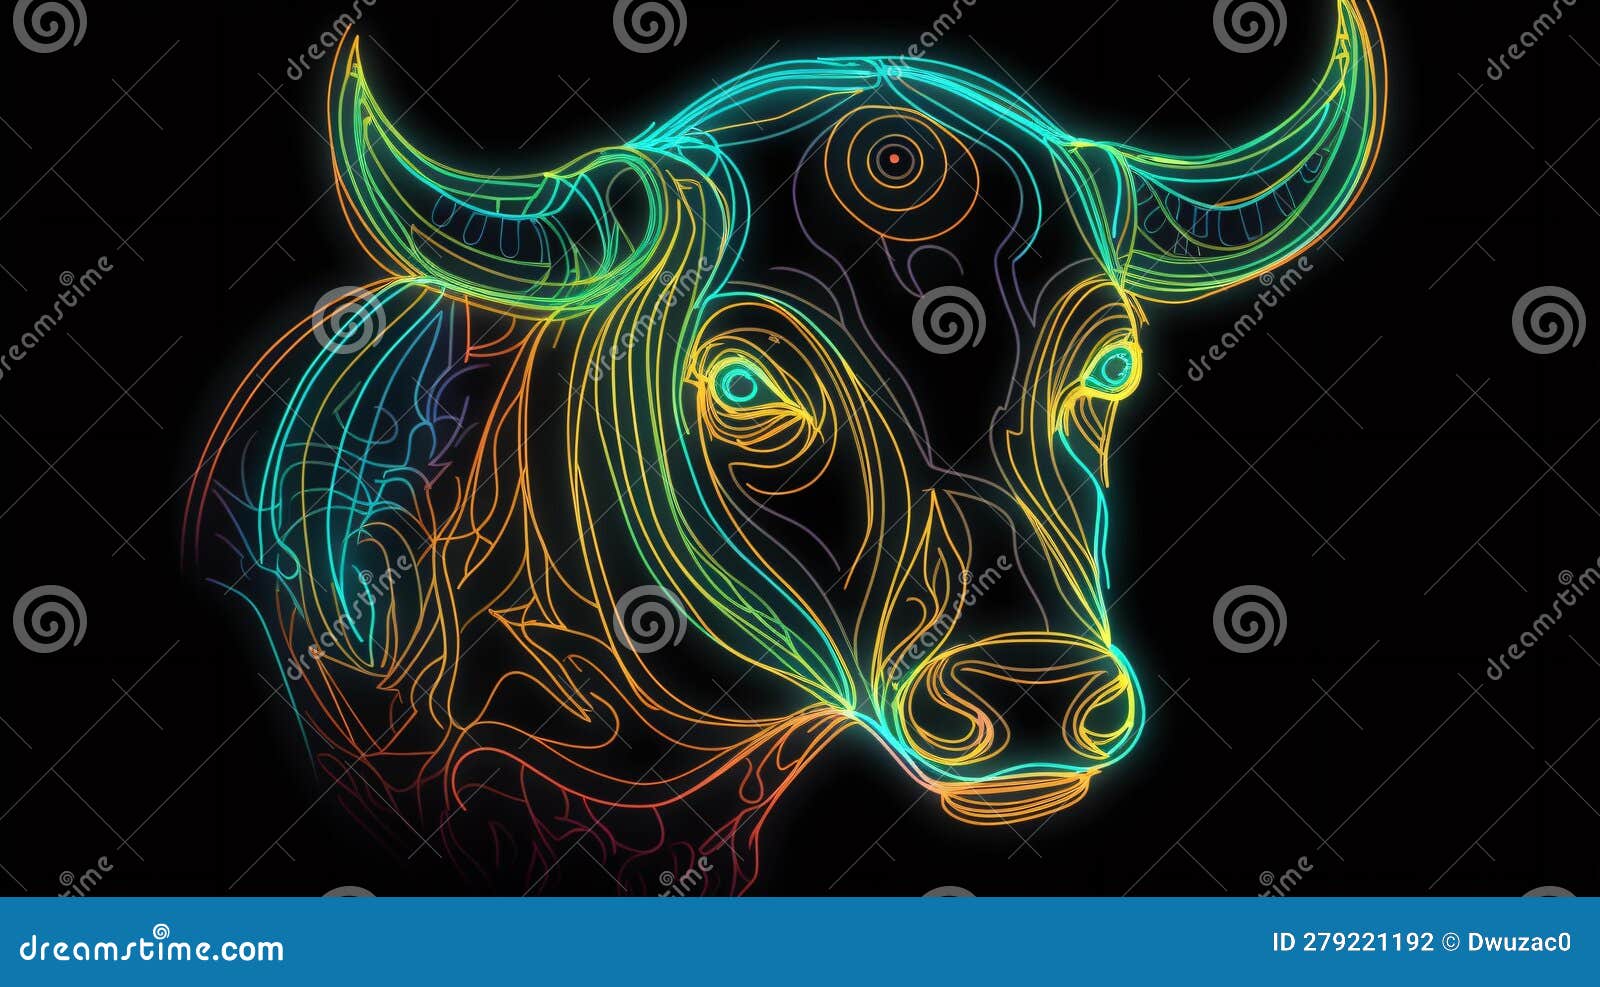 10700 Taurus Bull Stock Photos Pictures  RoyaltyFree Images  iStock   Charging bull Virgo Sagittarius